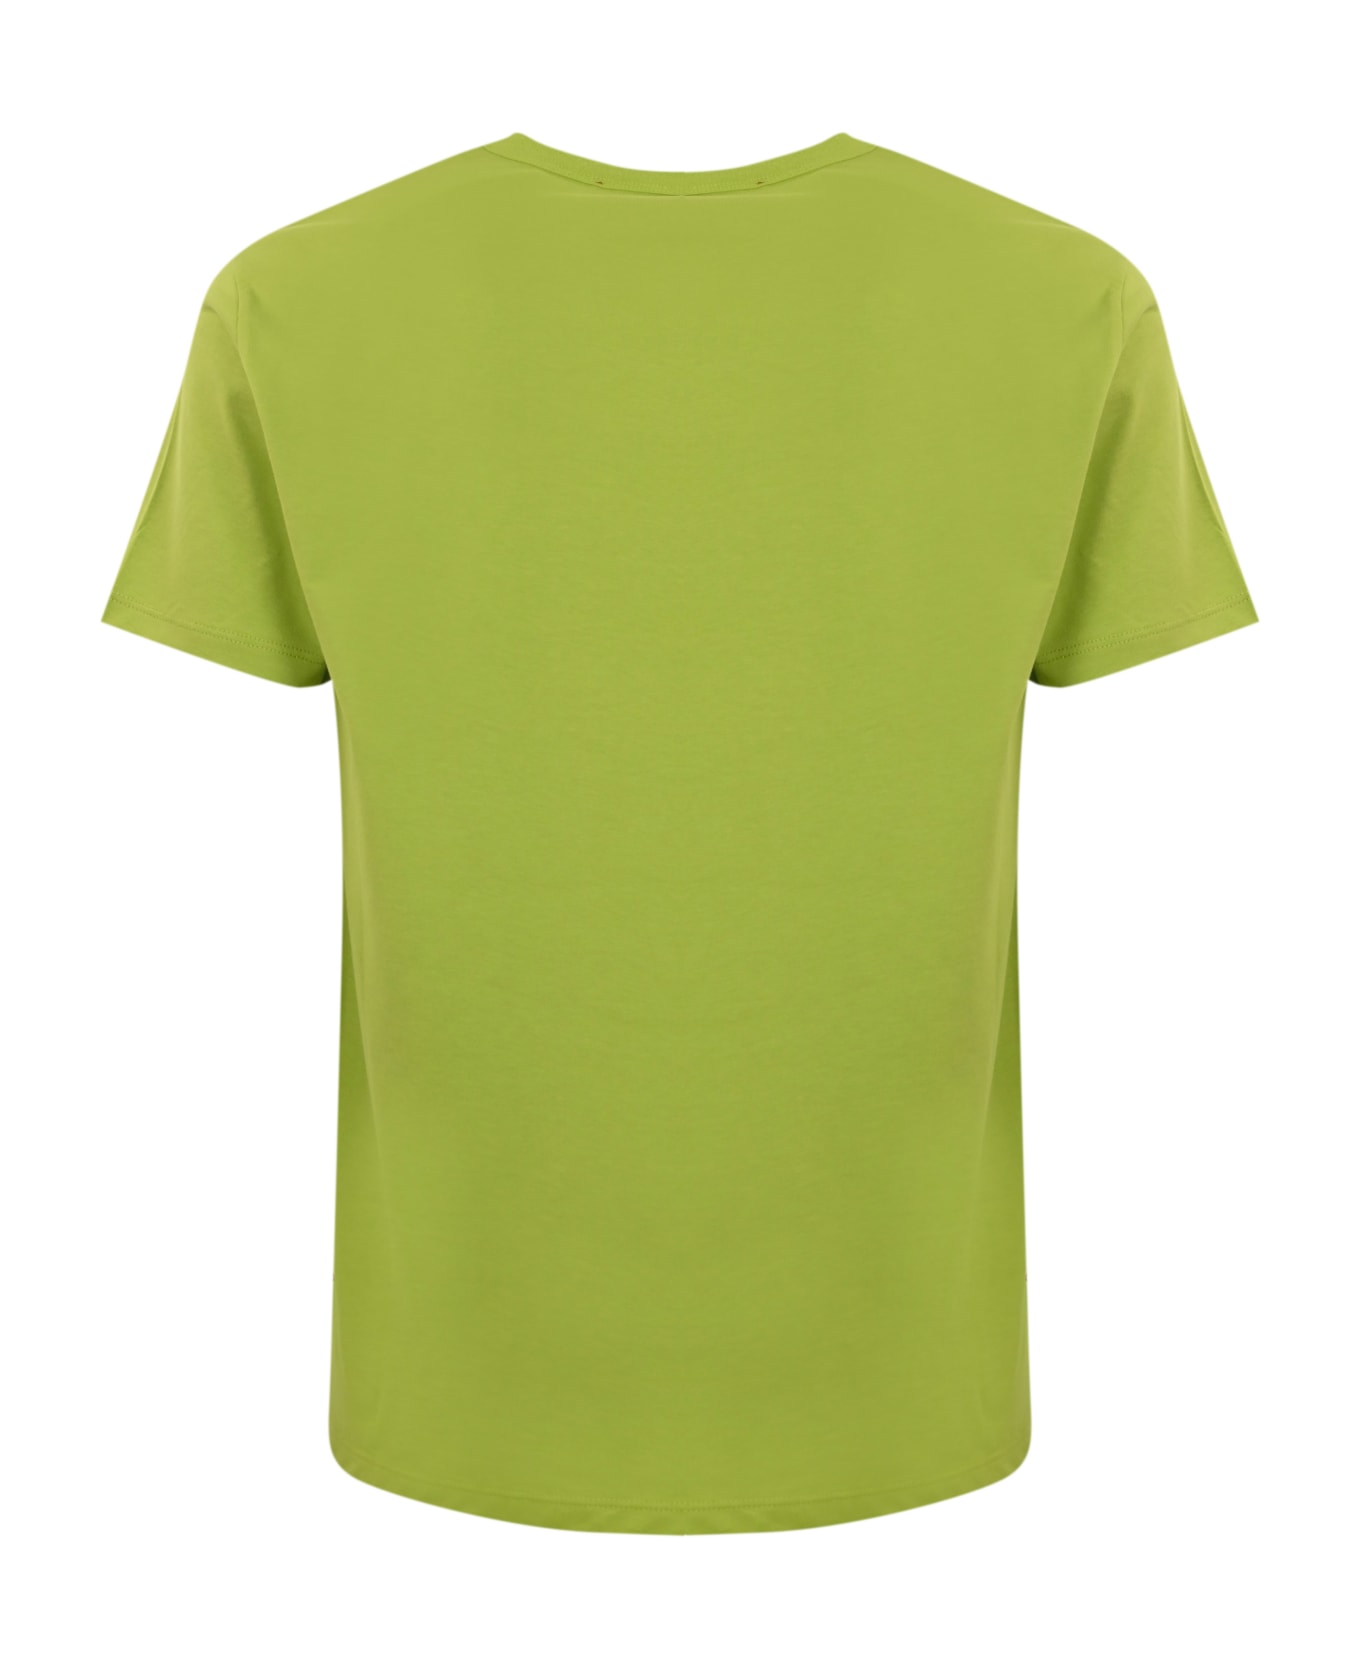 Amaranto Cotton T-shirt - Acido シャツ